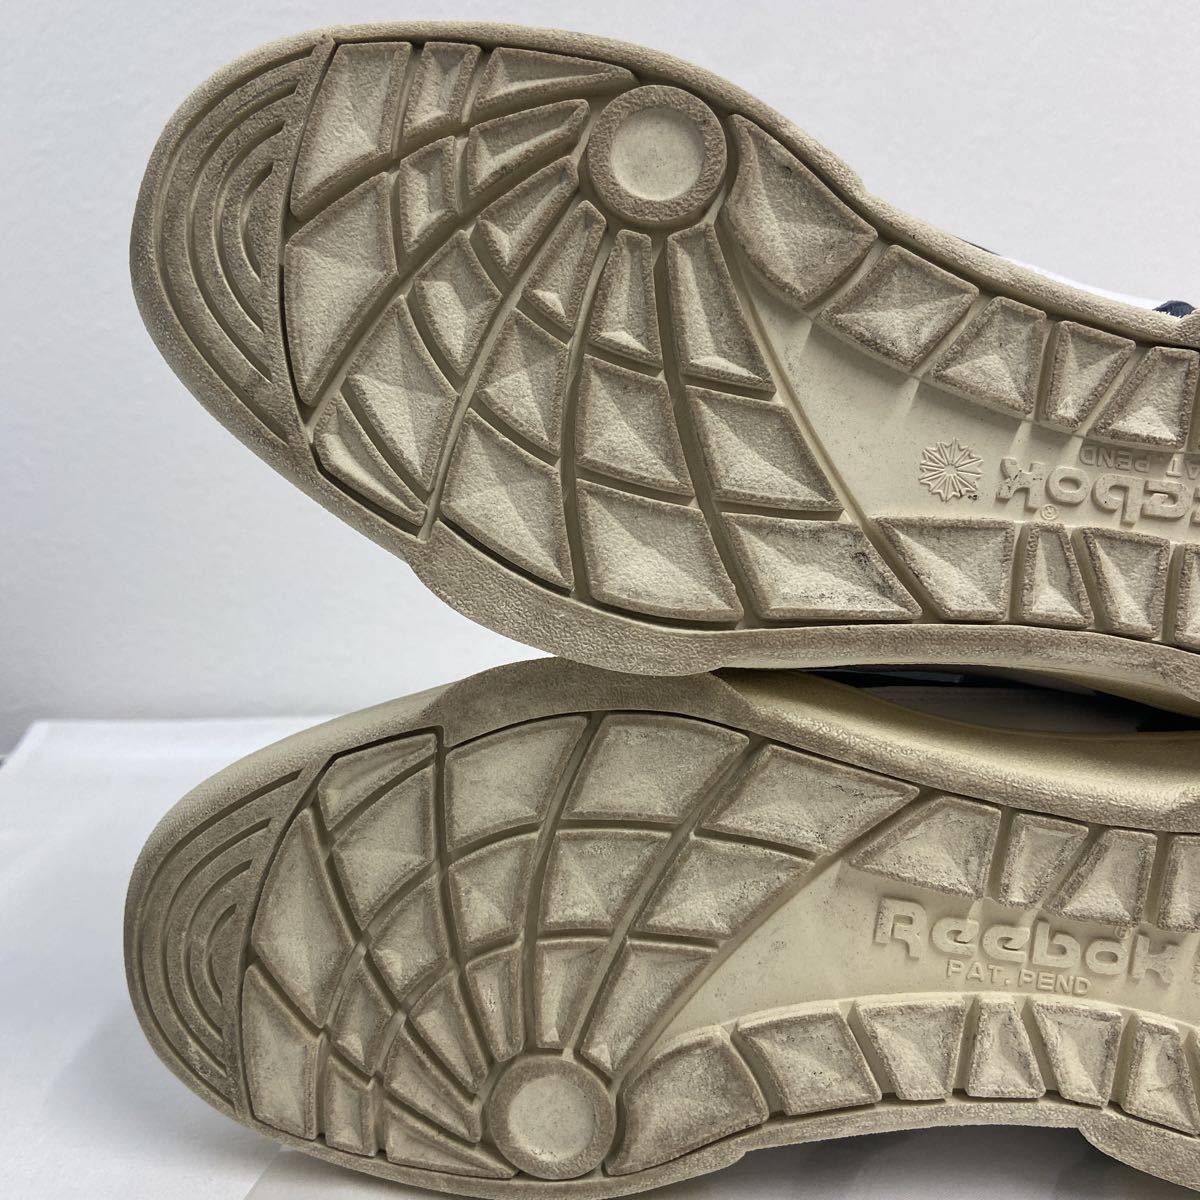 Reebok ALIEN STOMPER 28.0cm リーボック 映画 エイリアン スタンパー US10 ハイカット ストンパー スニーカー シューズ 靴 限定 レア_画像7